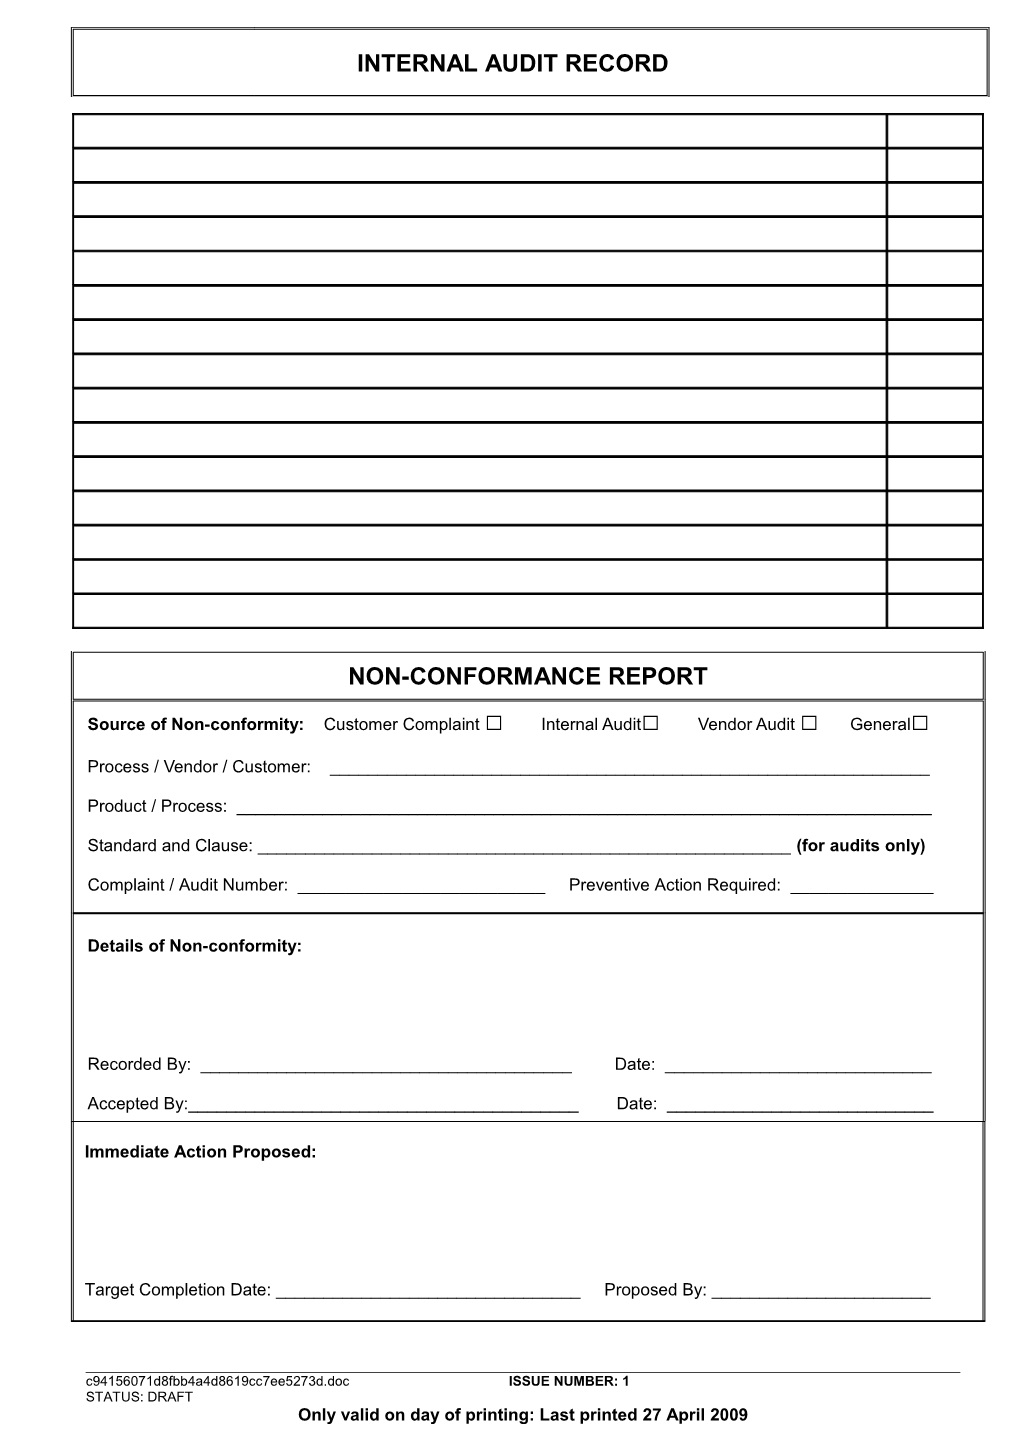 Source of Non-Conformity: Customer Complaint Internal Audit Vendor Audit General